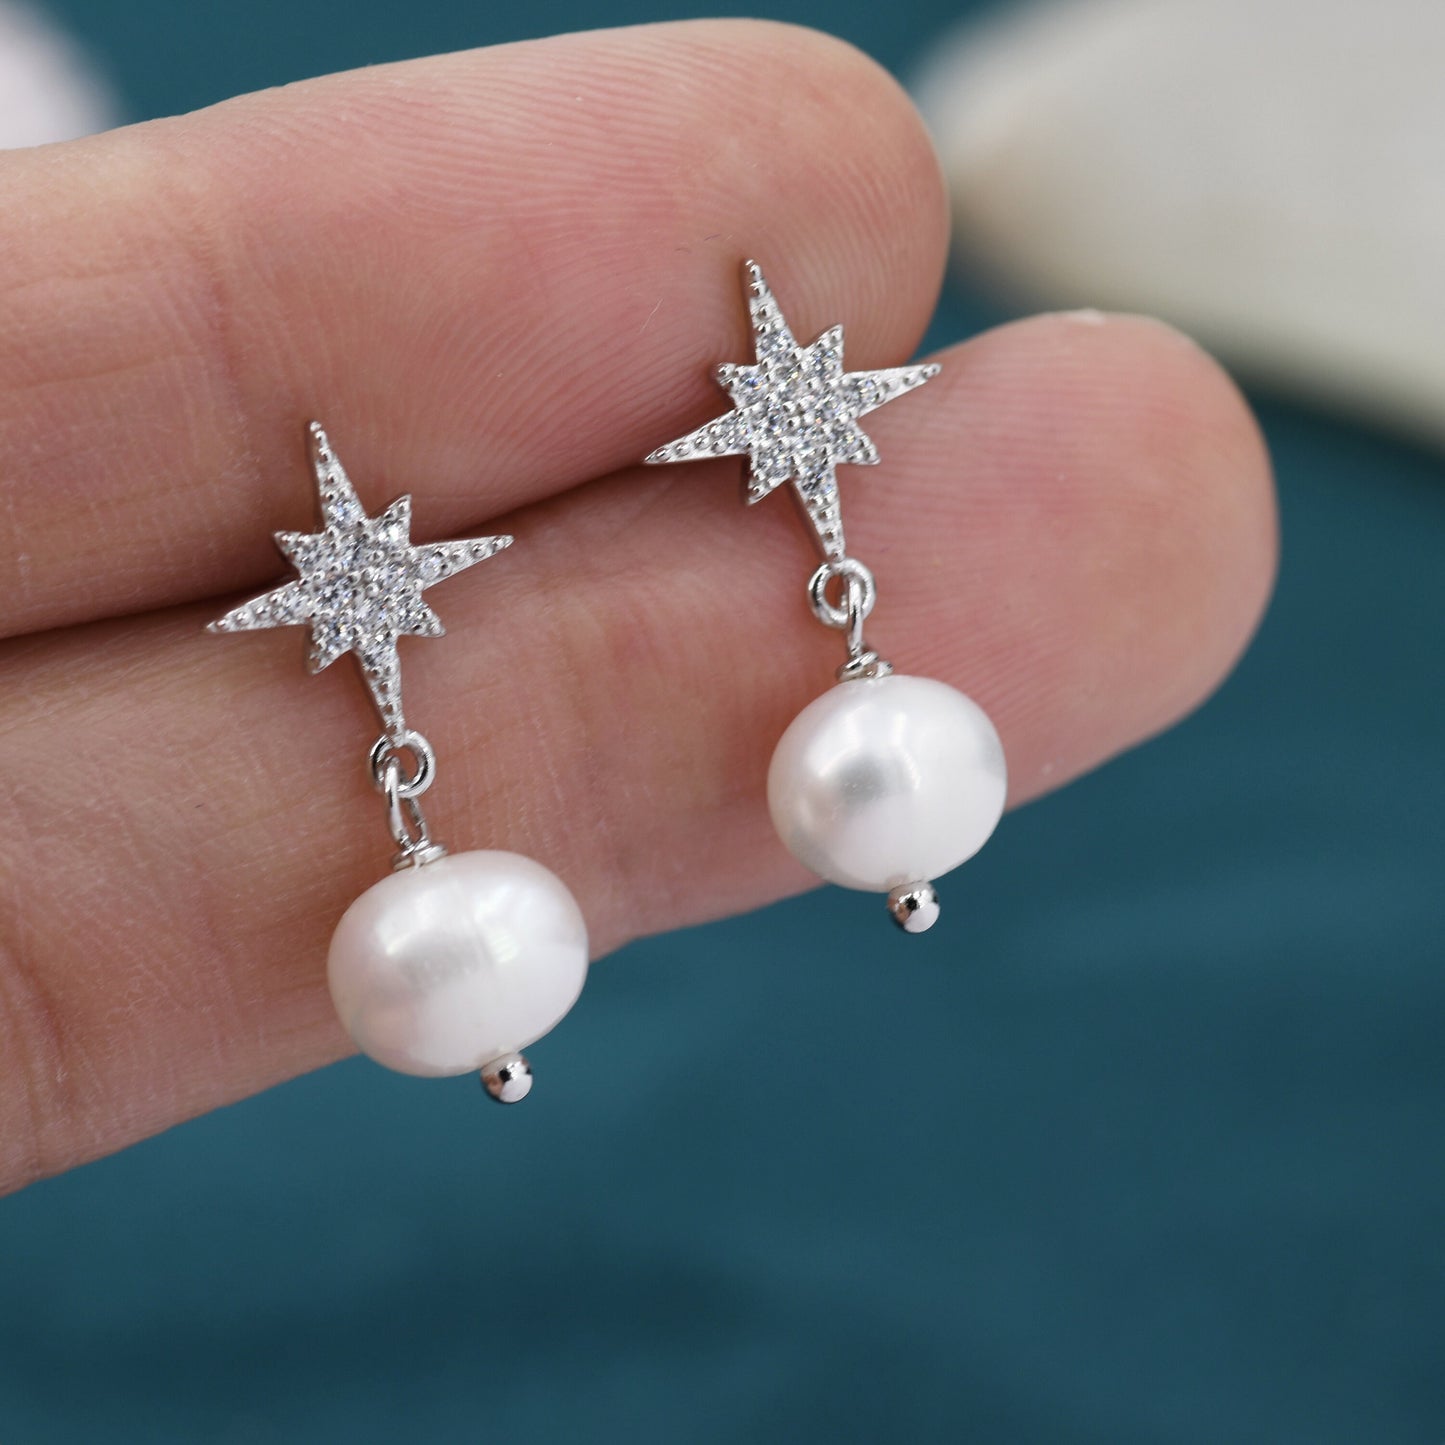 Starburst Star with Dangling Baroque Pearl Drop Earrings in Sterling Silver, Silver or Gold, Keshi Pearl Earrings,